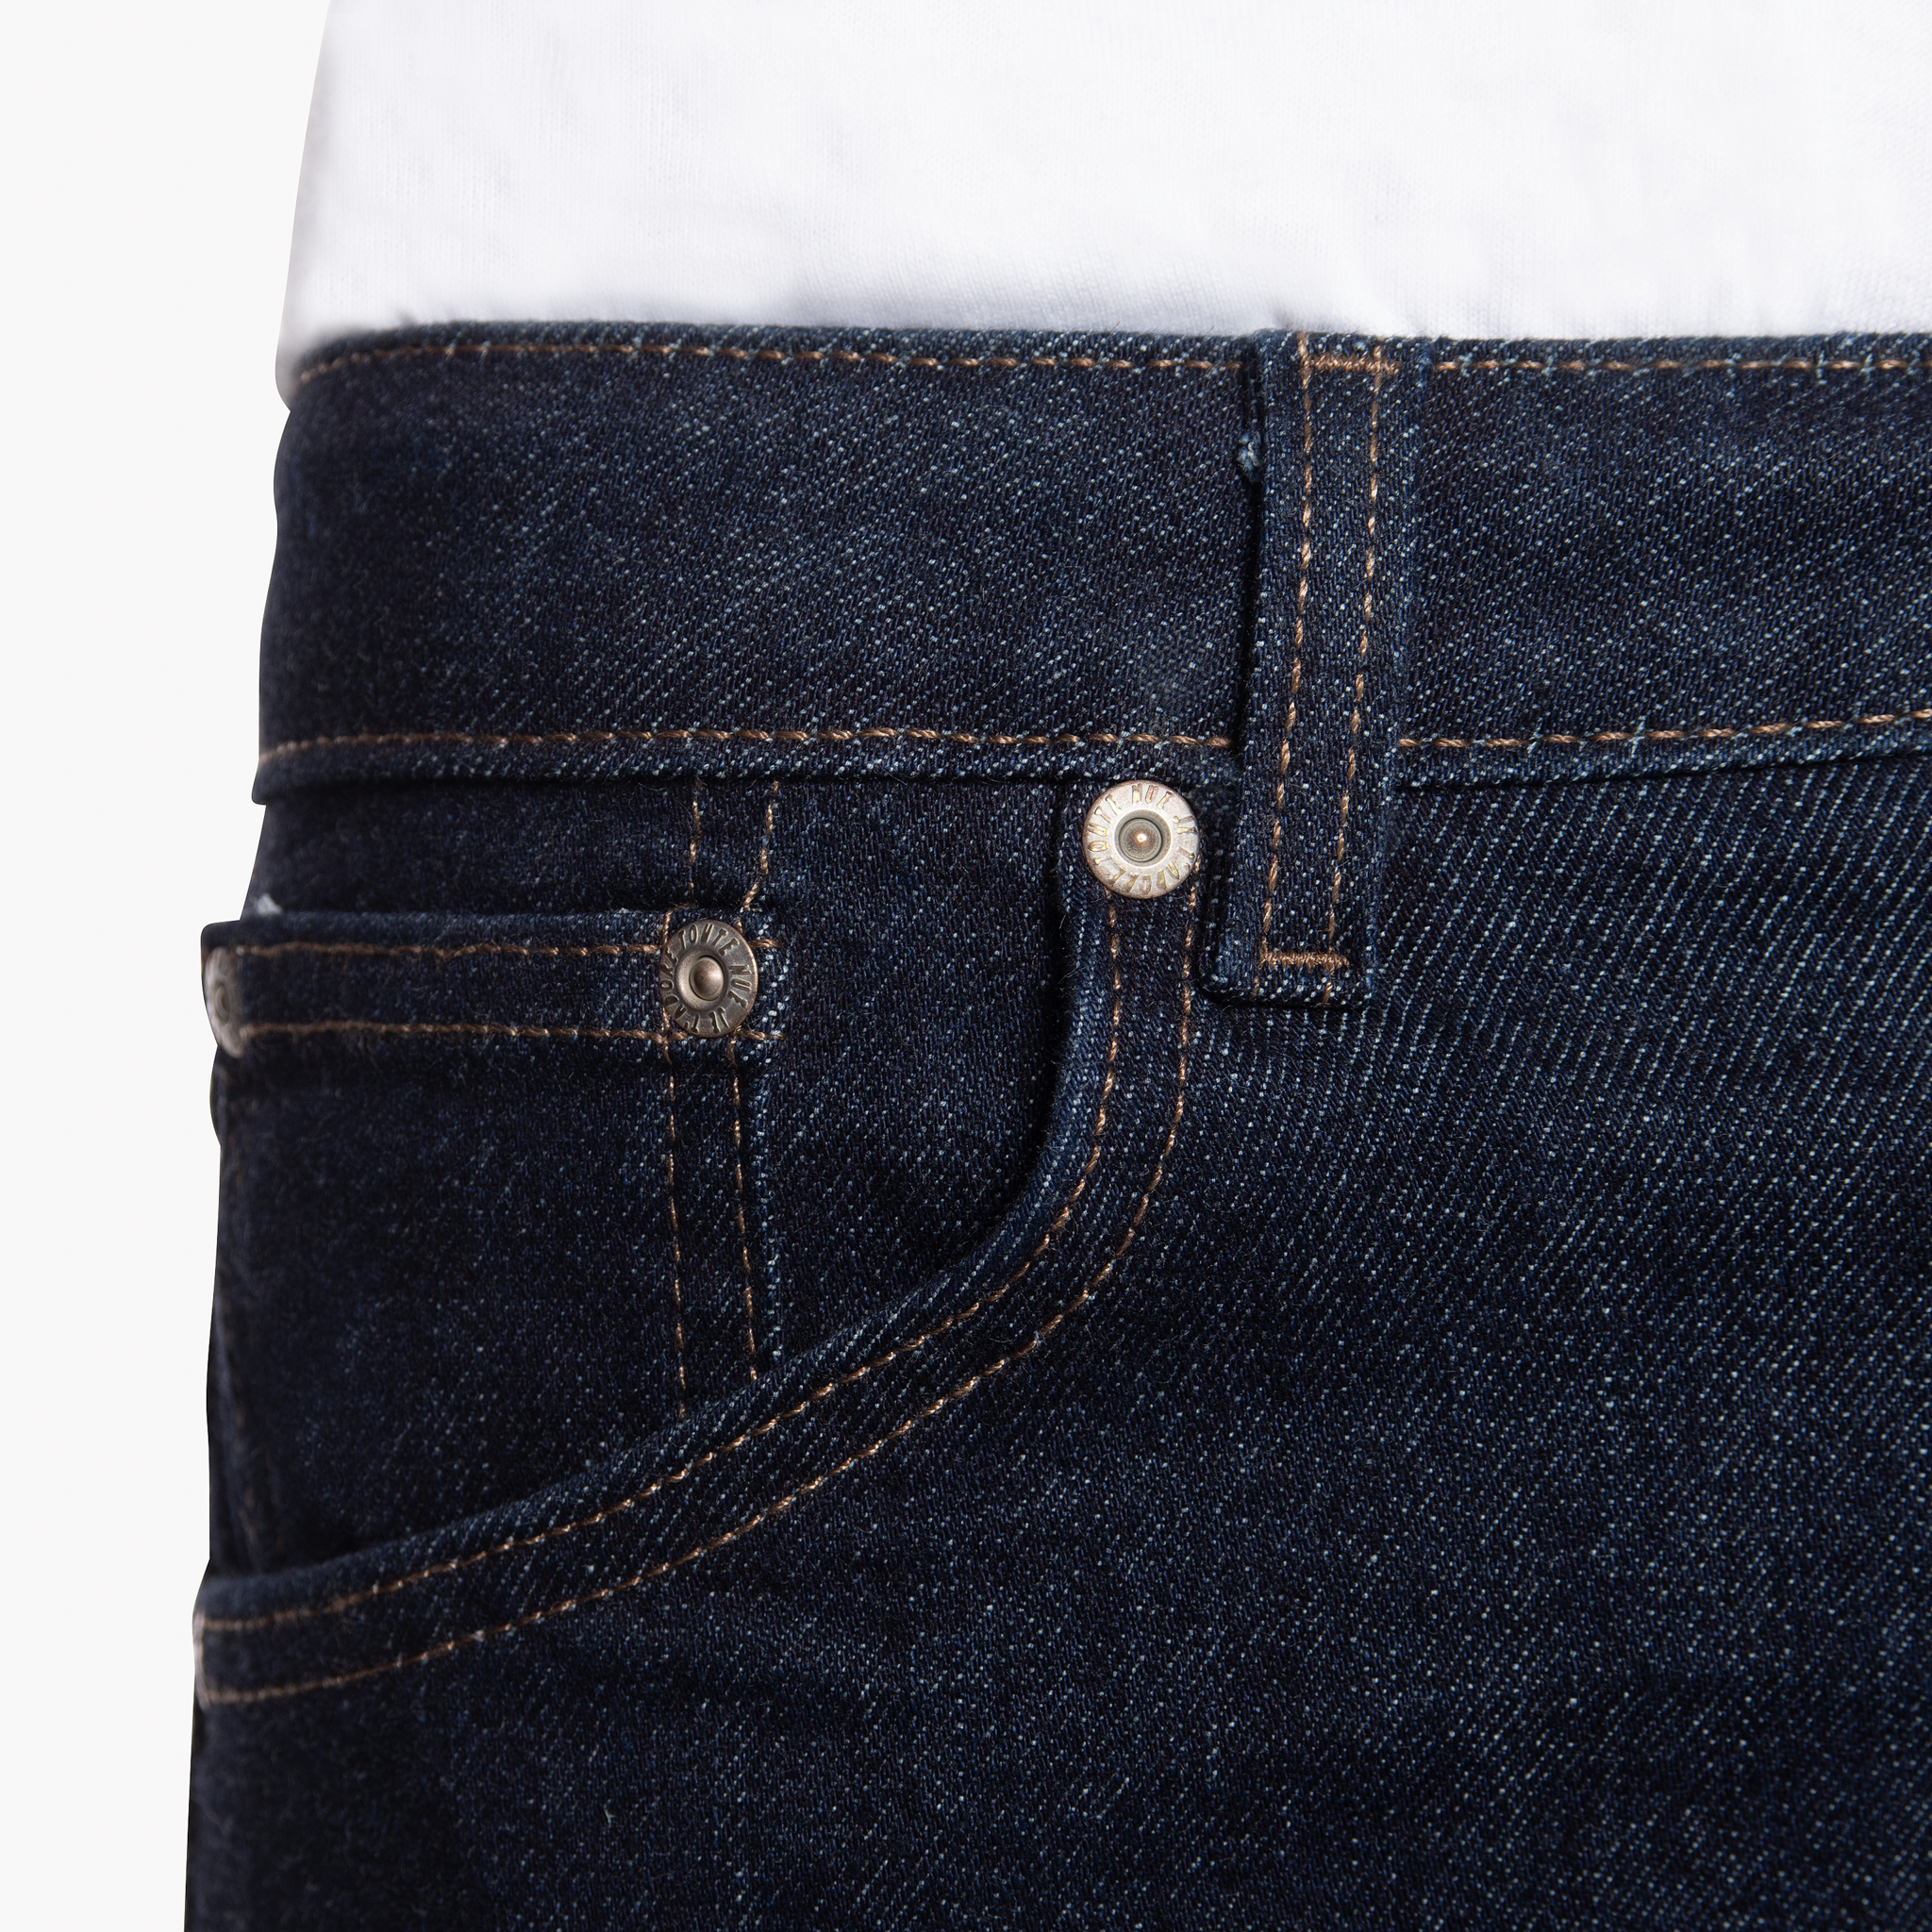  Women’s Blue Comfort jeans - coin pocket 